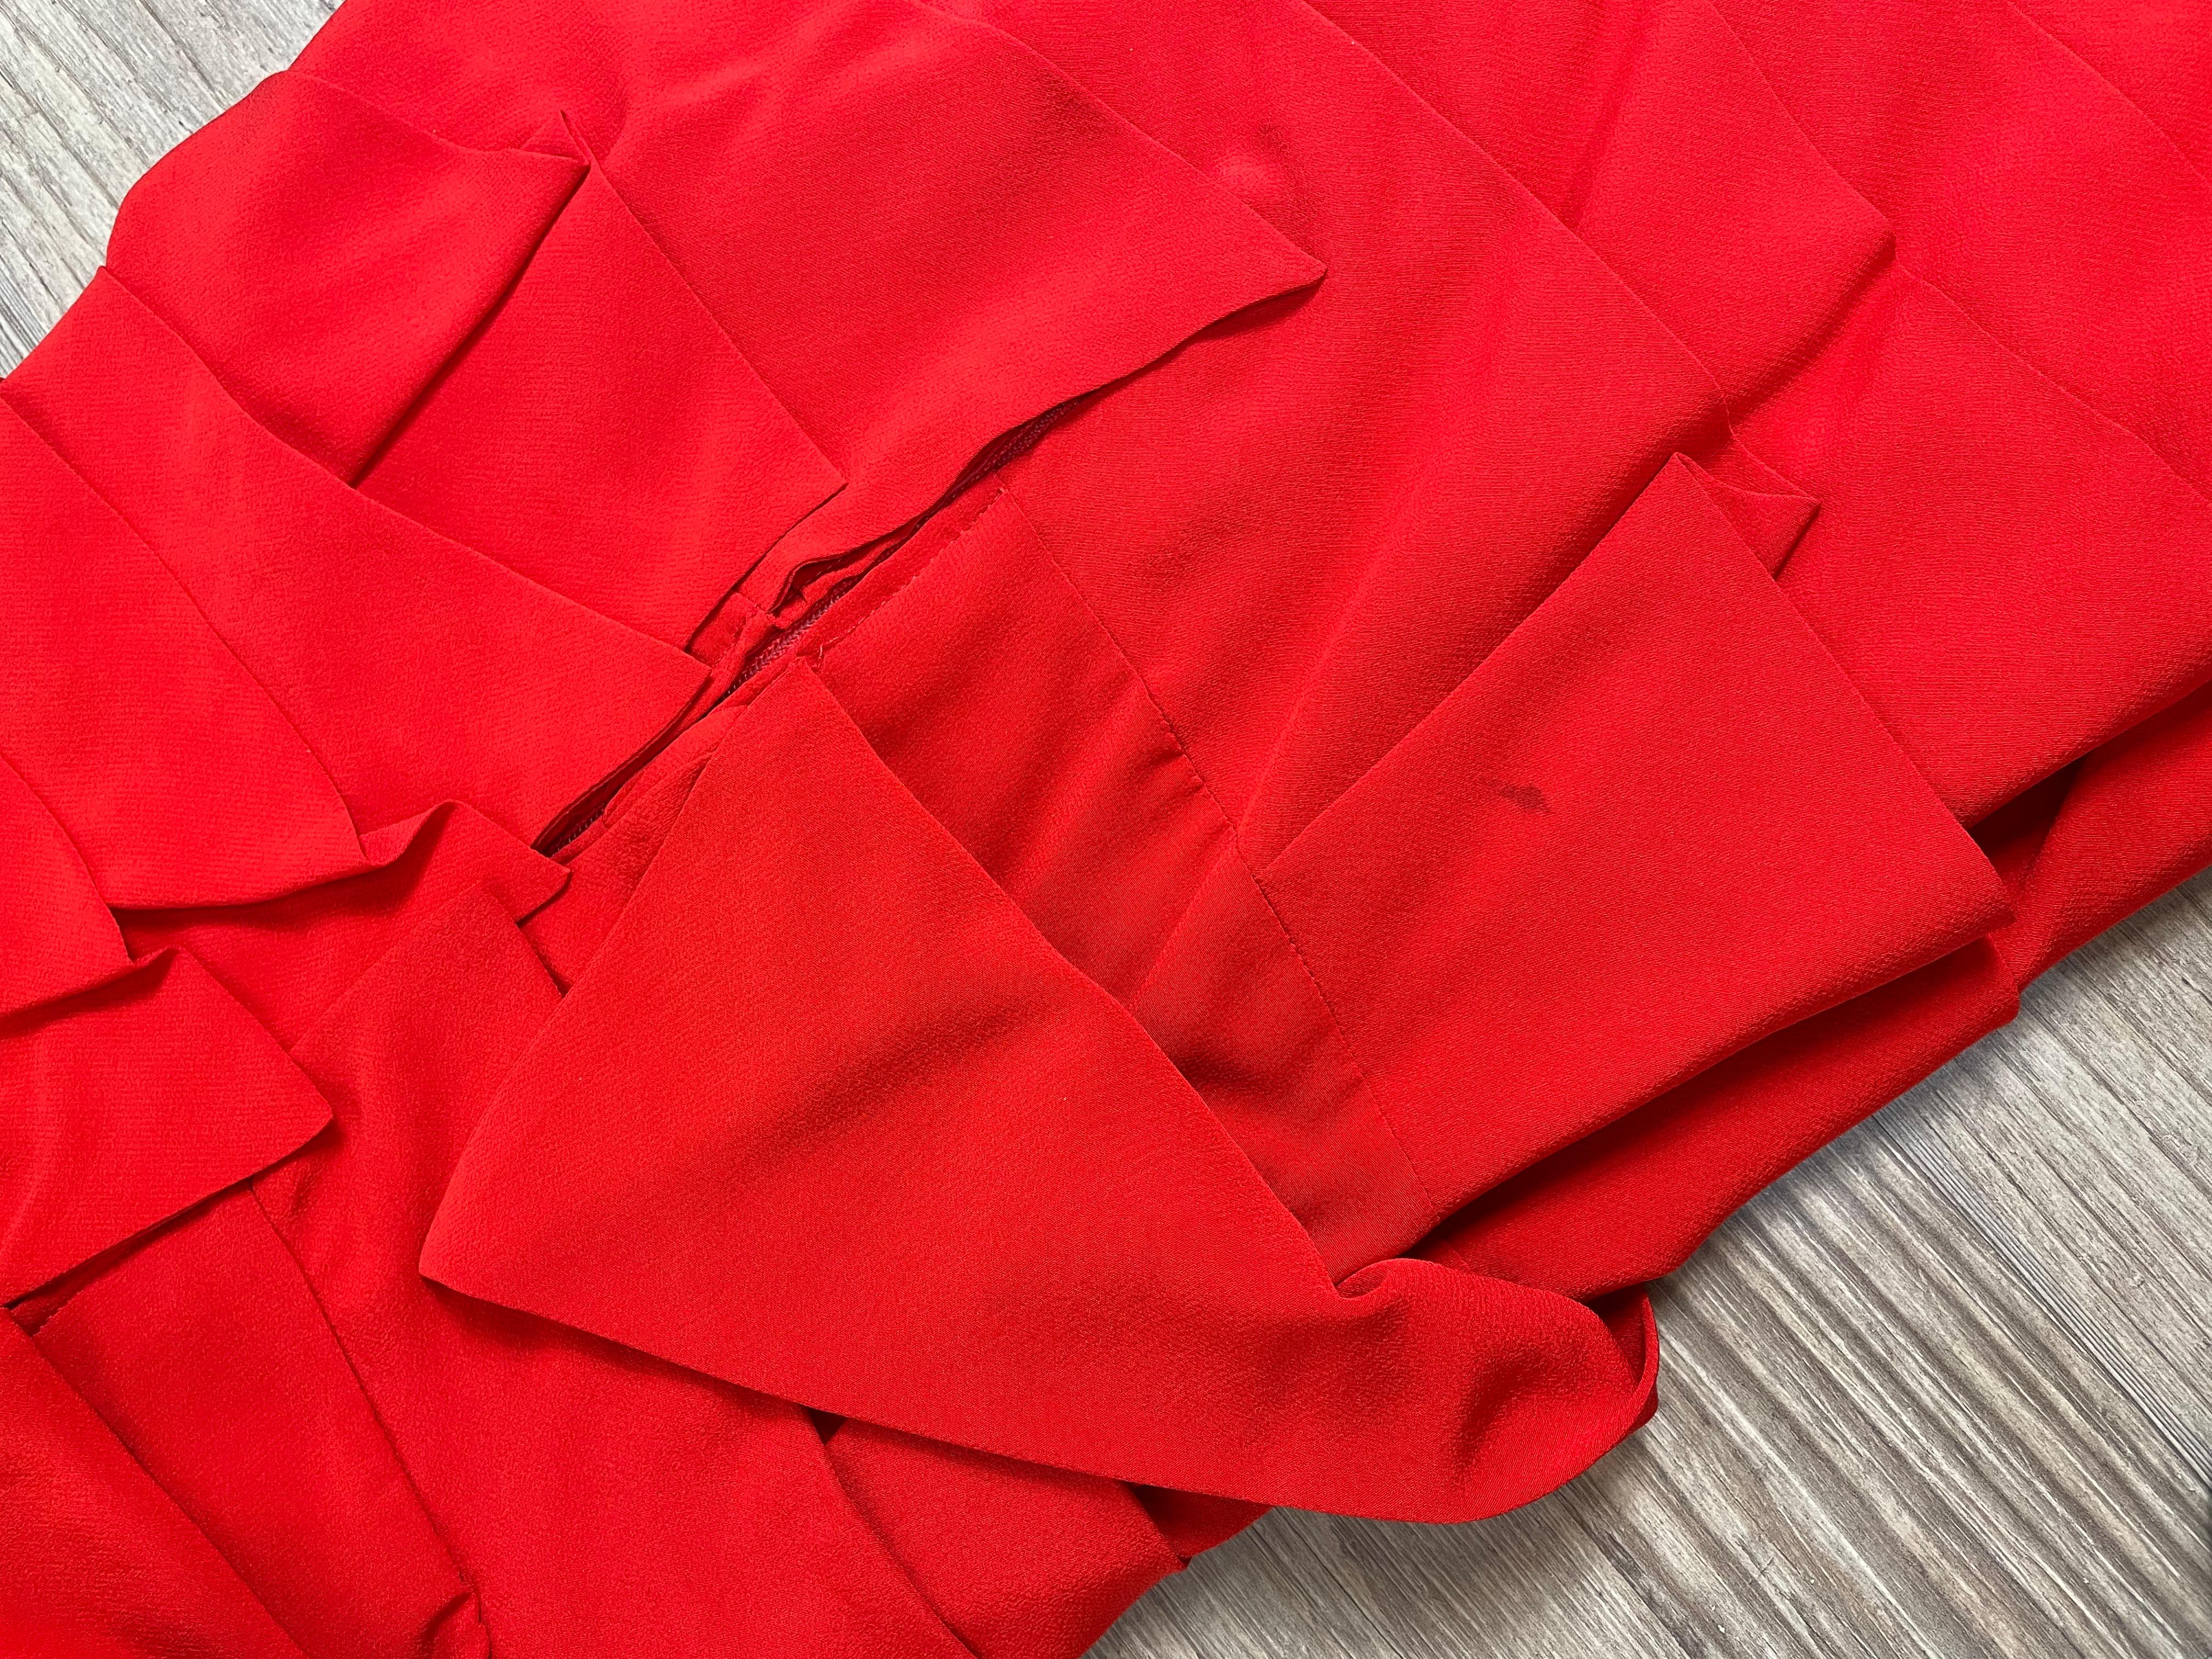 Gianni Versace Sera 1987-88 red dress 3